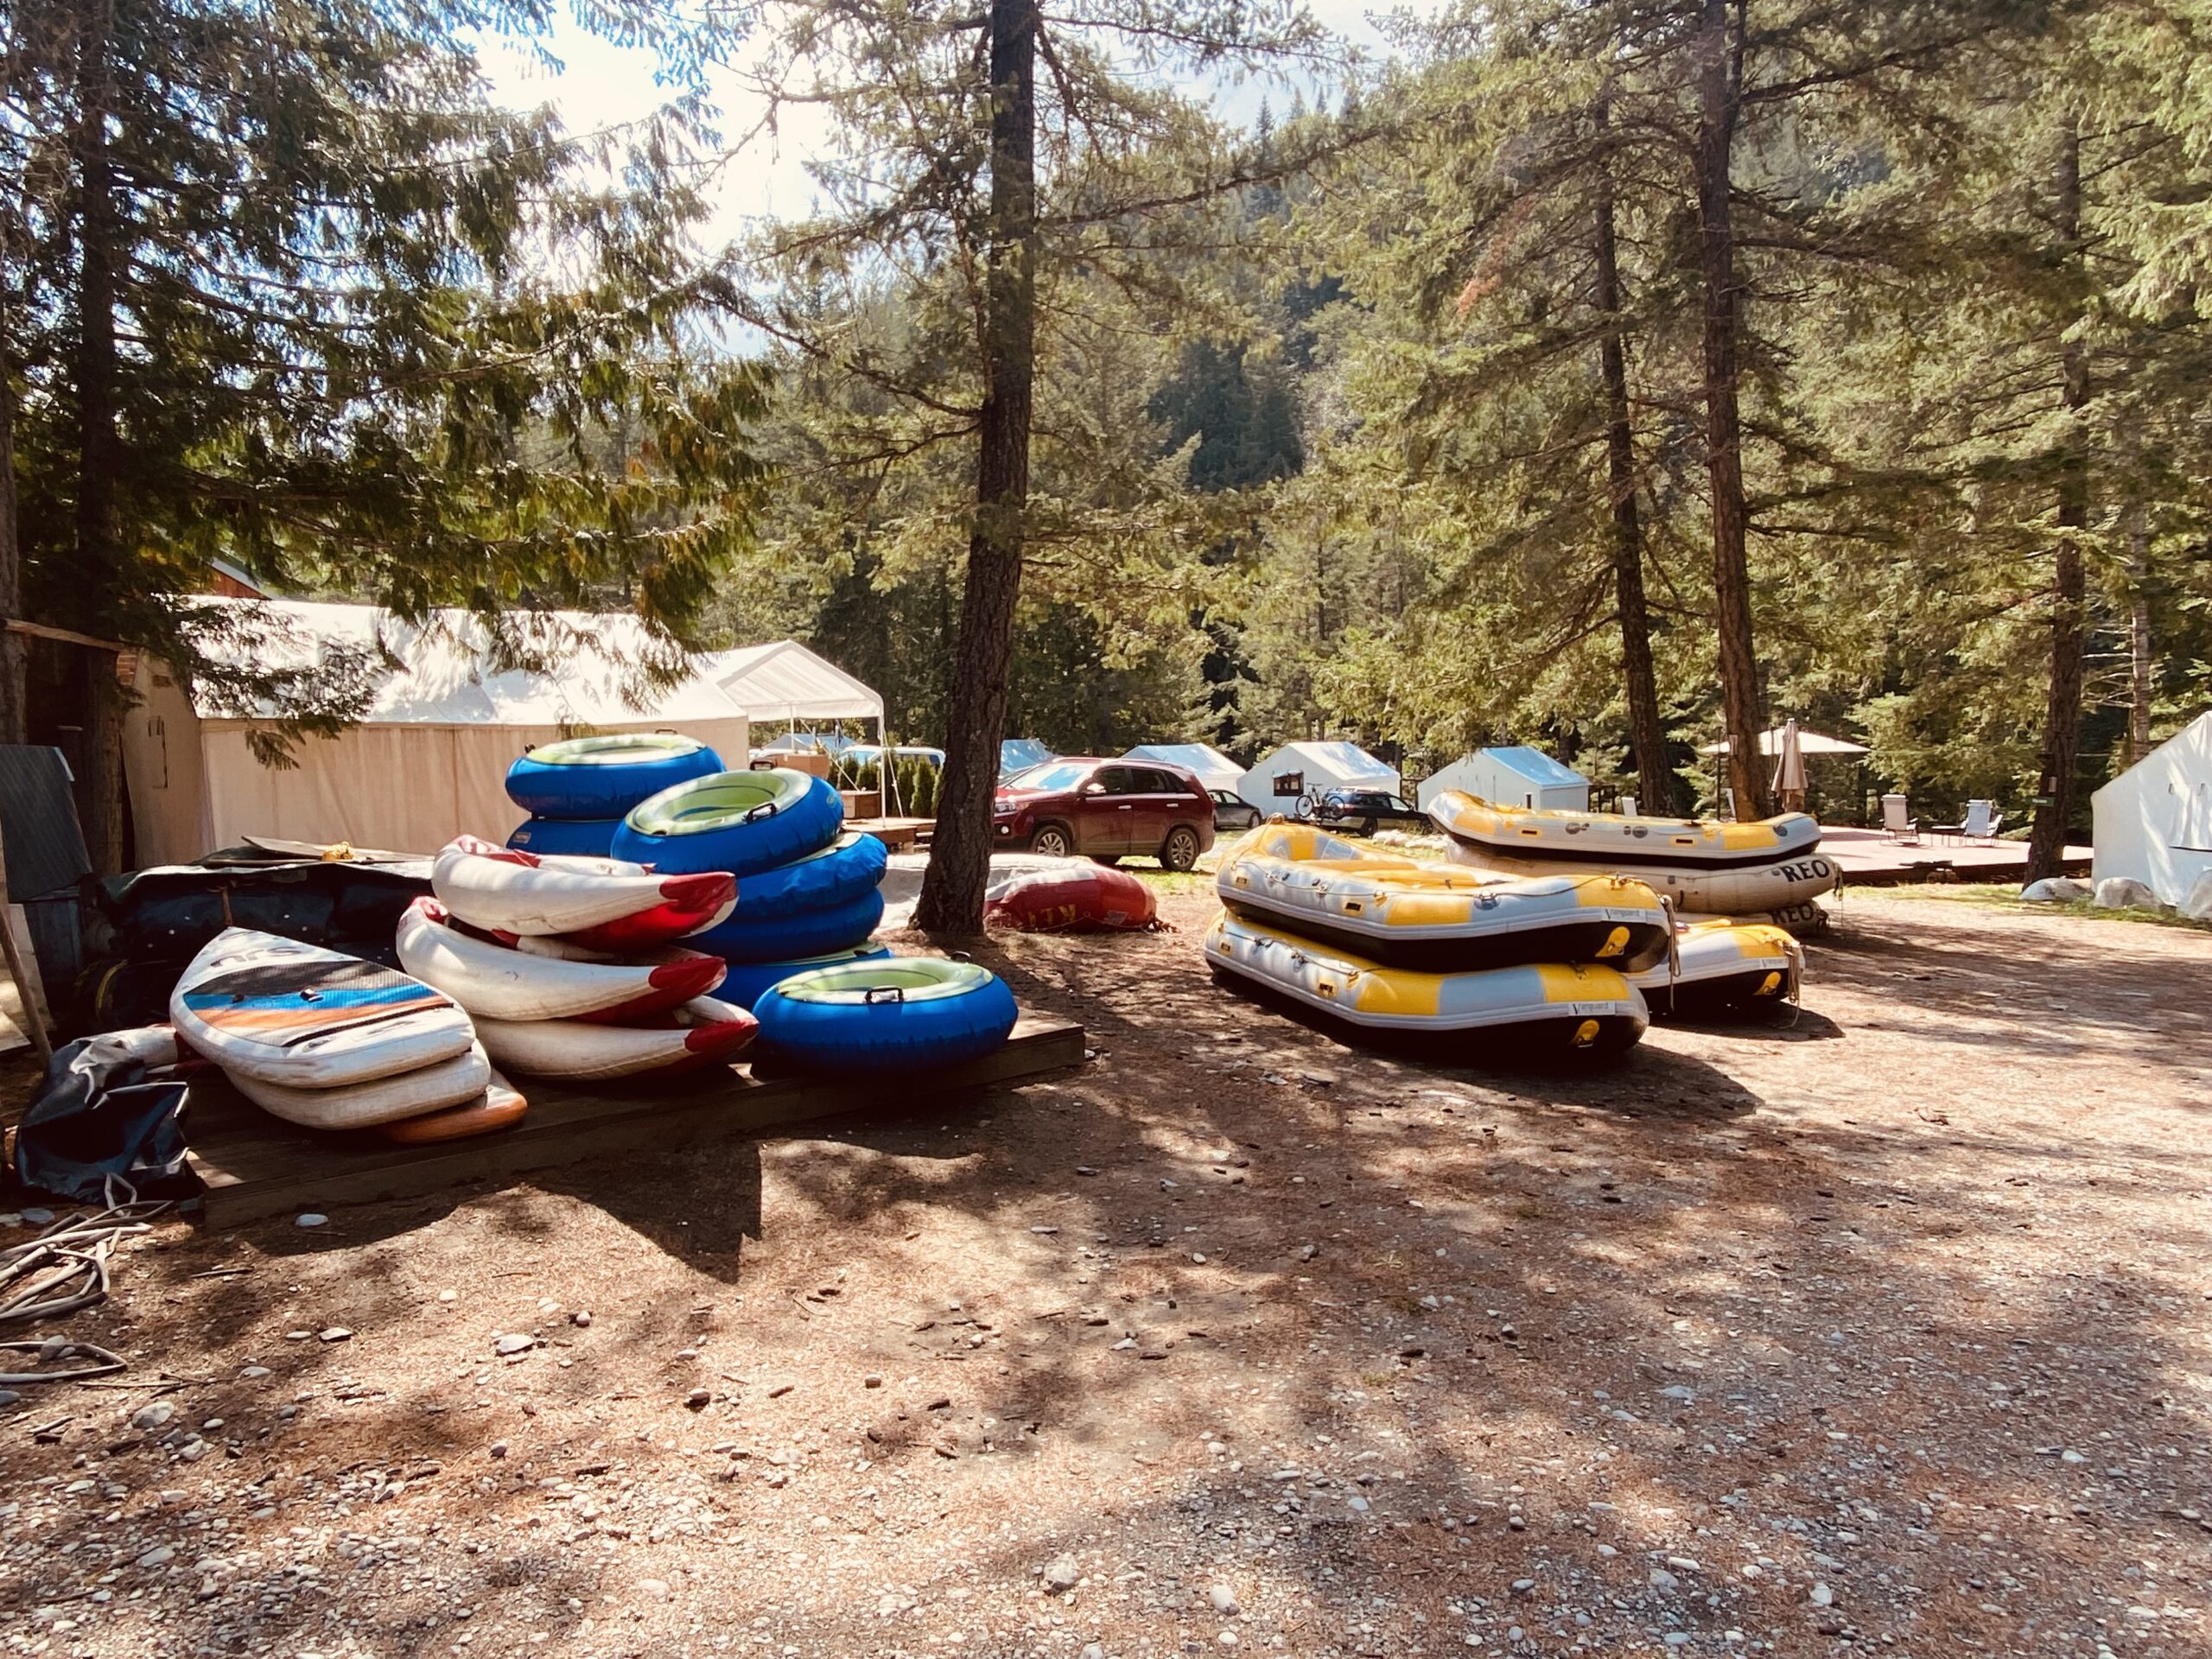 Rafts, kayaks, floats